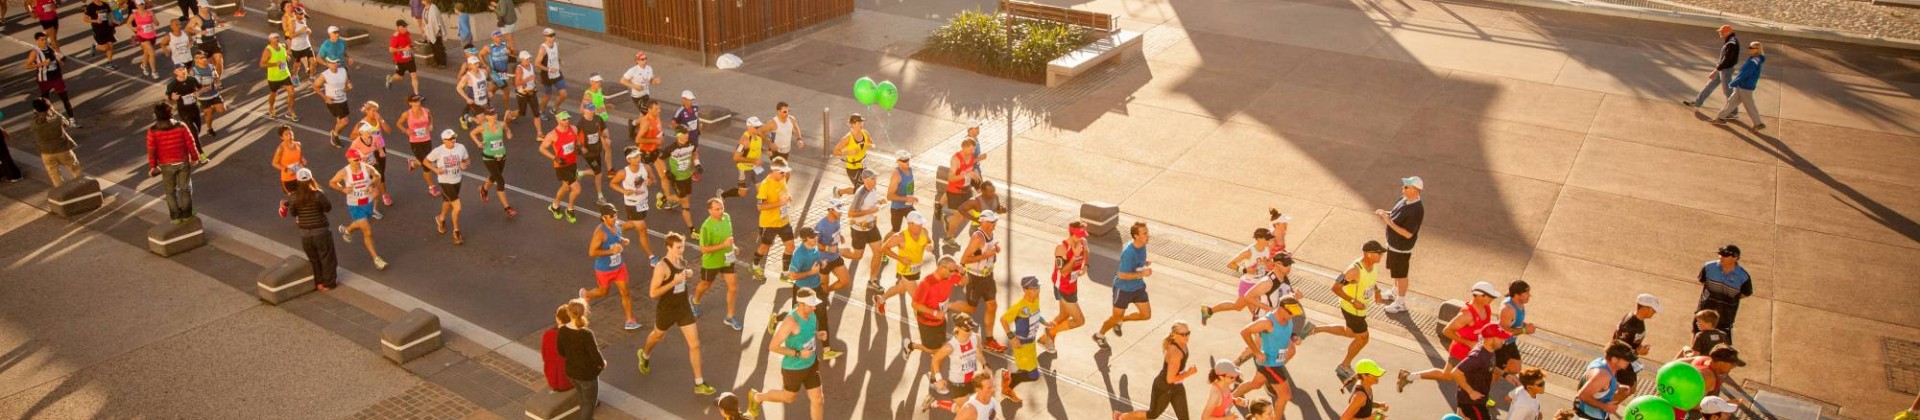 Gold Coast Airport Marathon - 30 June to 1 July 2018